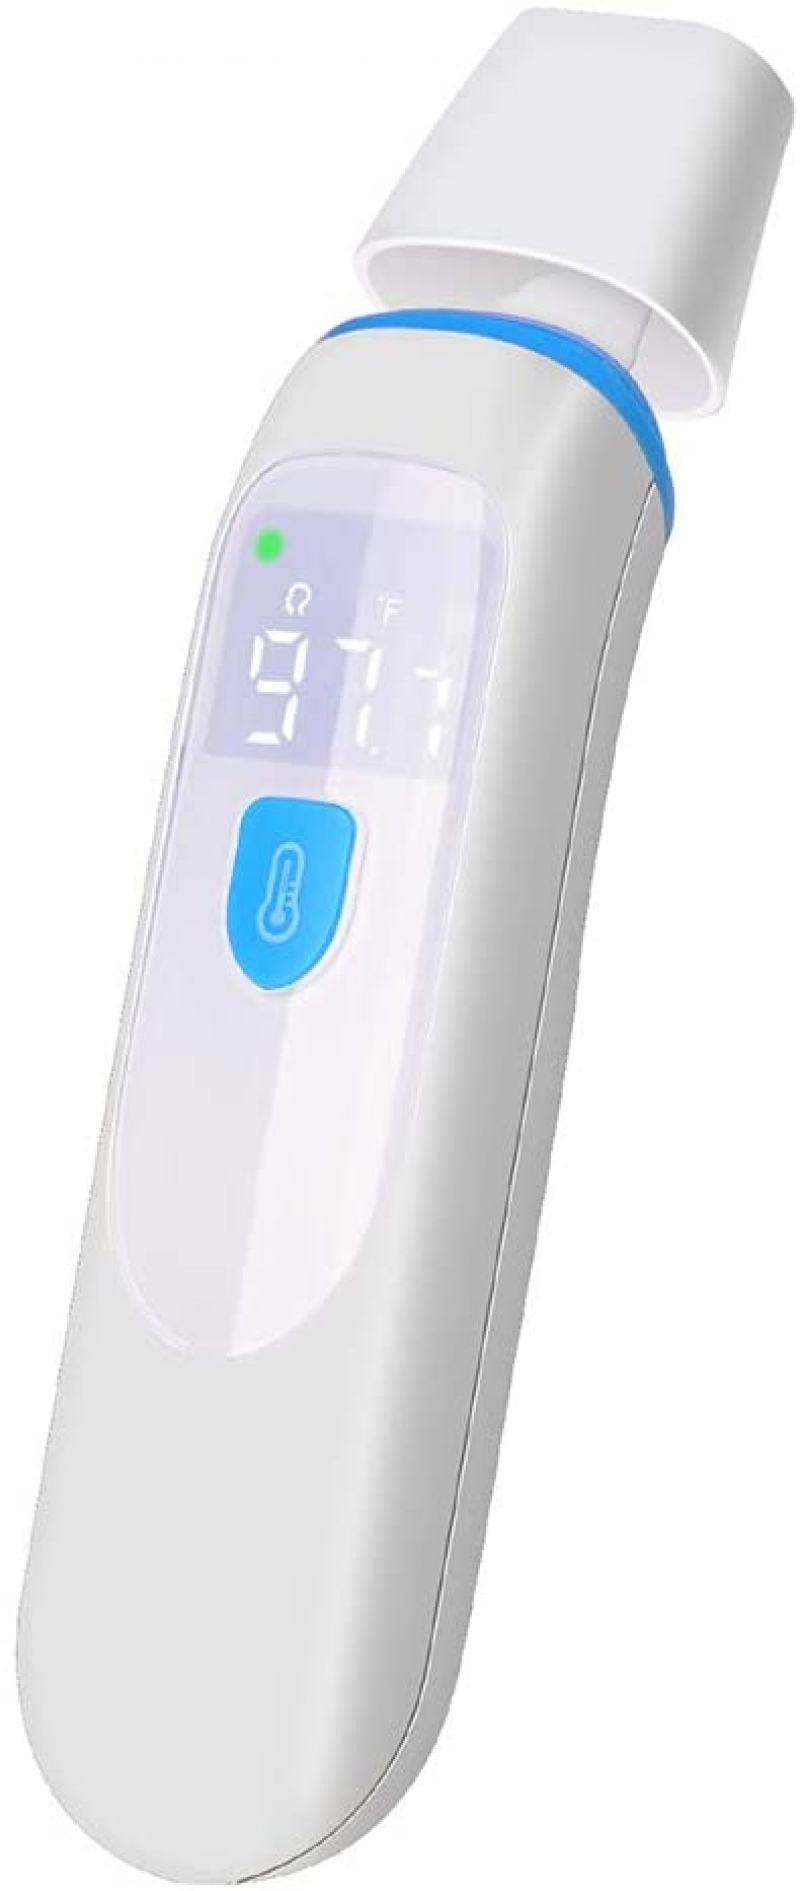 ihocon: Surcom Infrared Thermometer 額頭温度計